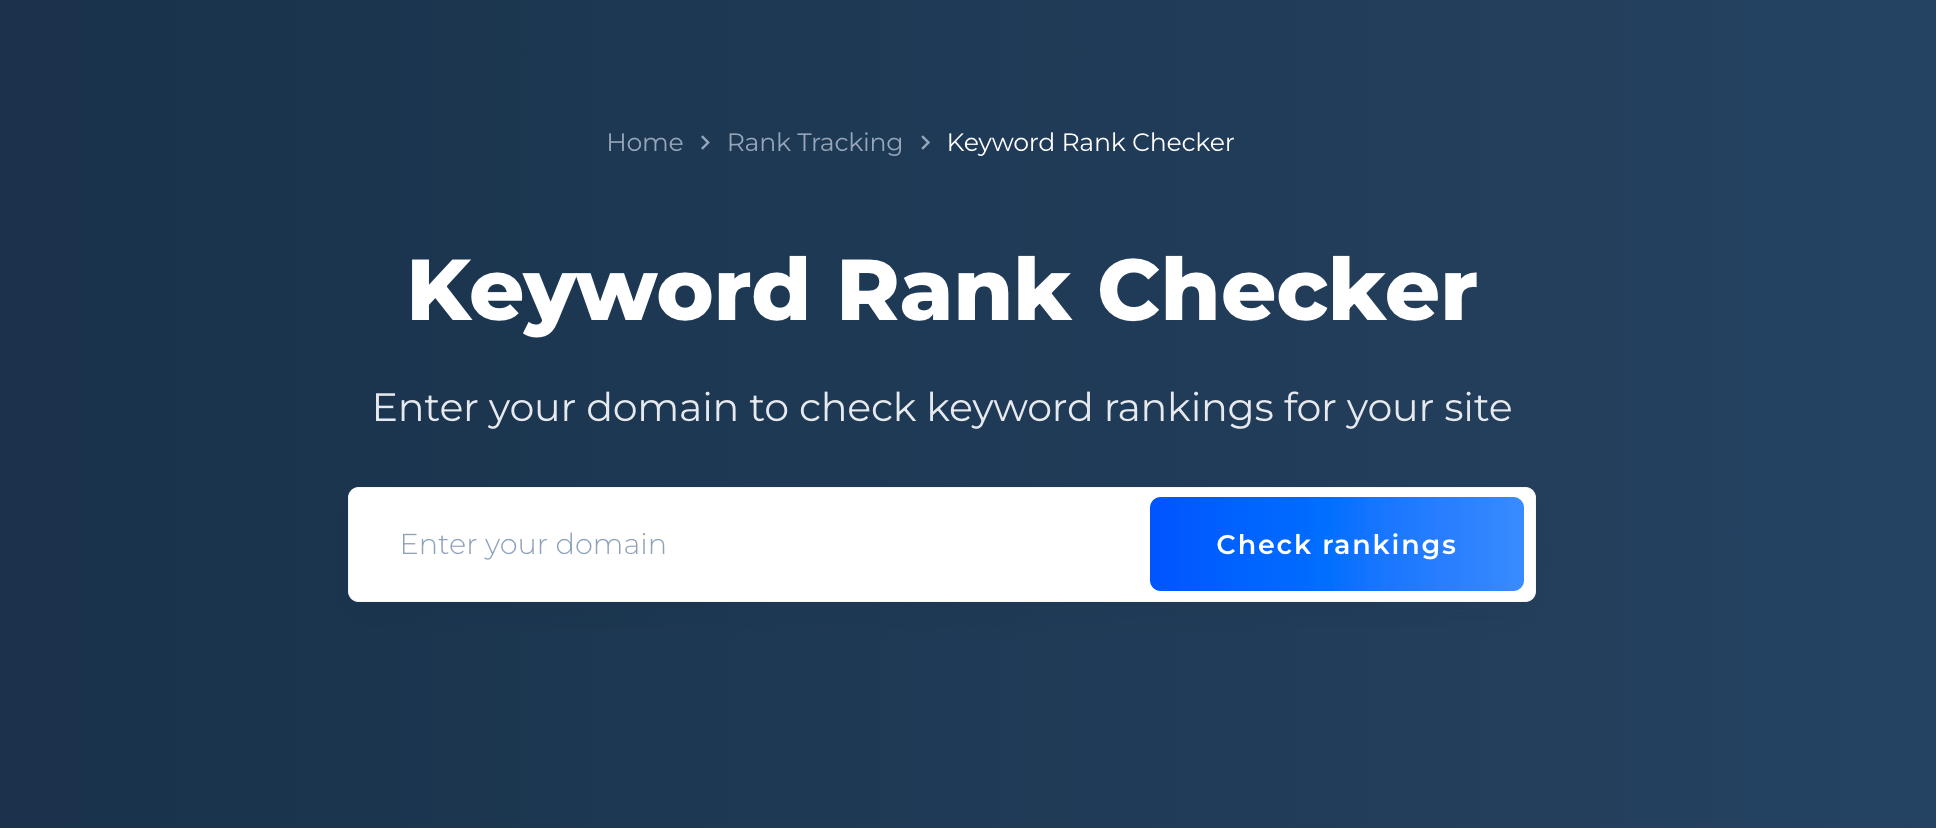 Keyword Rank Checker